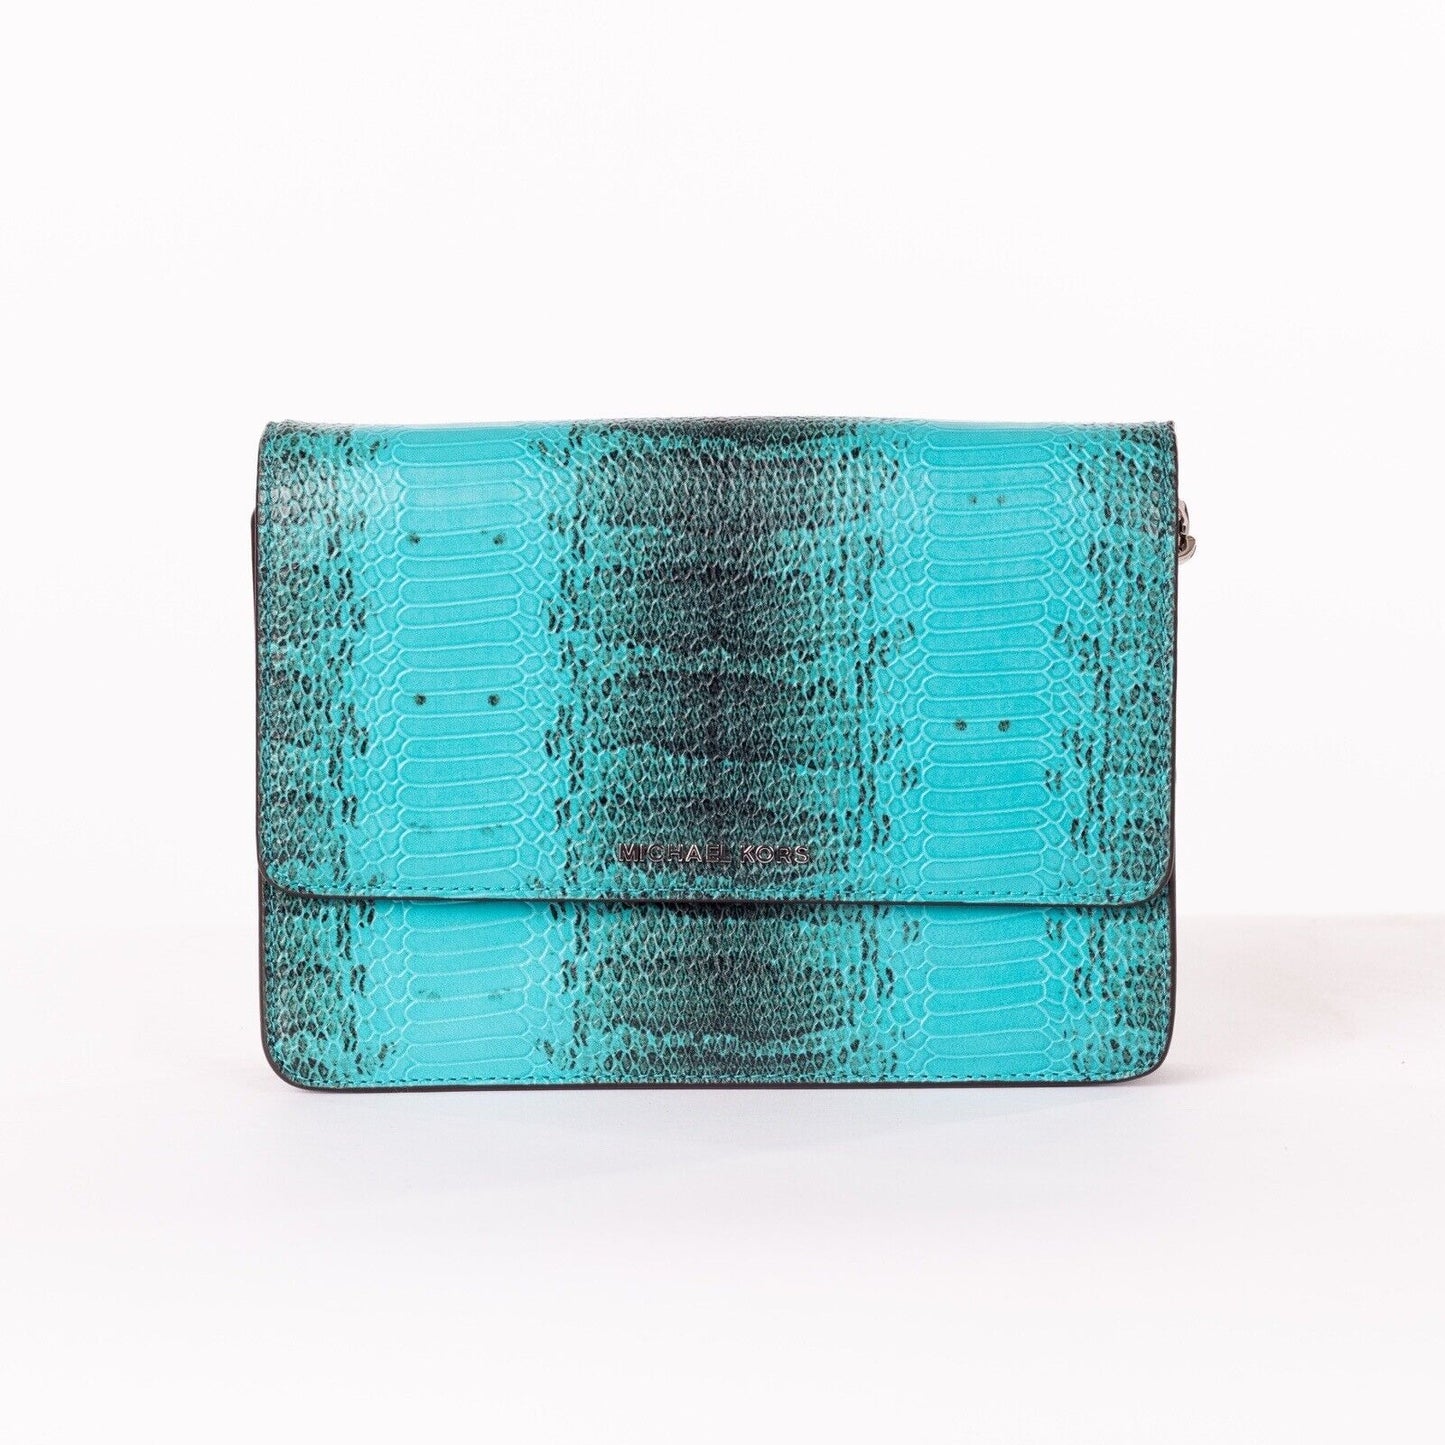 Turquoise Snake Skin Printed Crossbody Handbag